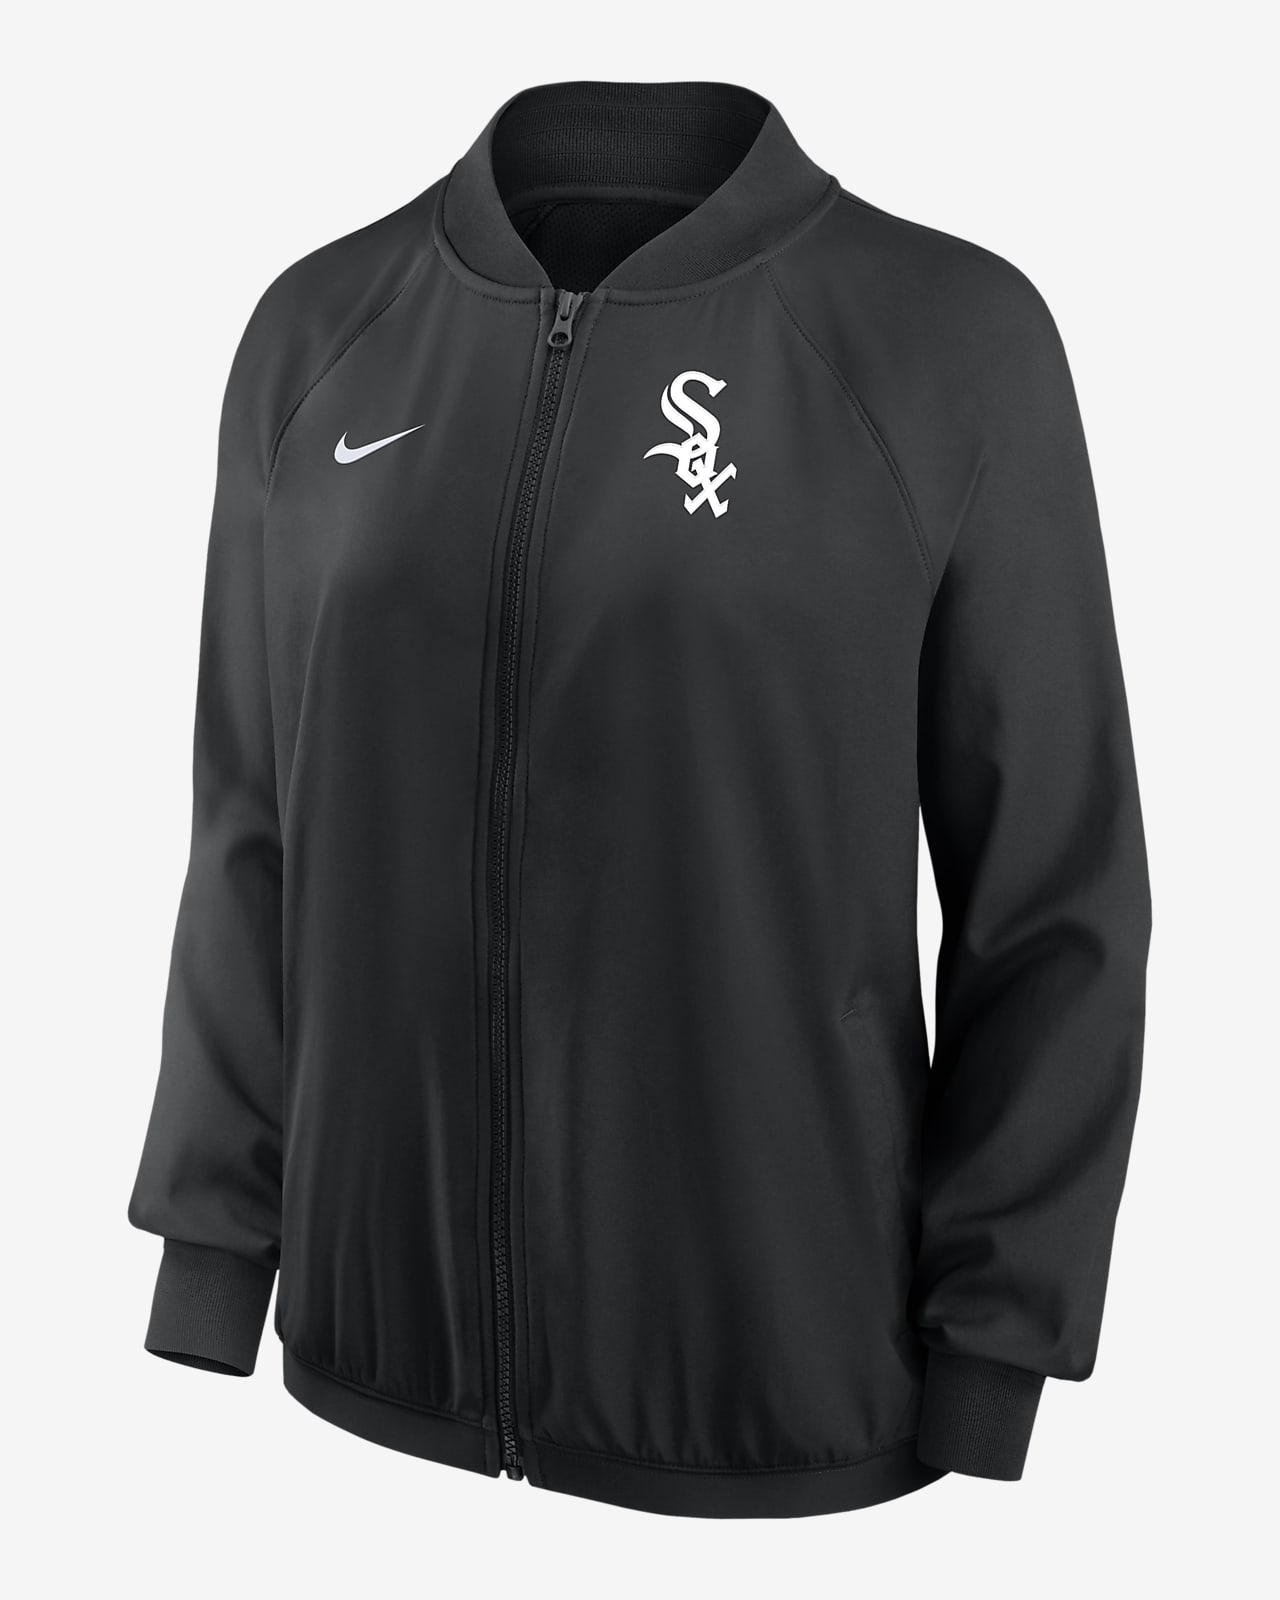 Deshonestidad Volver a disparar Mira Nike Dri-FIT Team (MLB Chicago White Sox) Women's Full-Zip Jacket. Nike.com